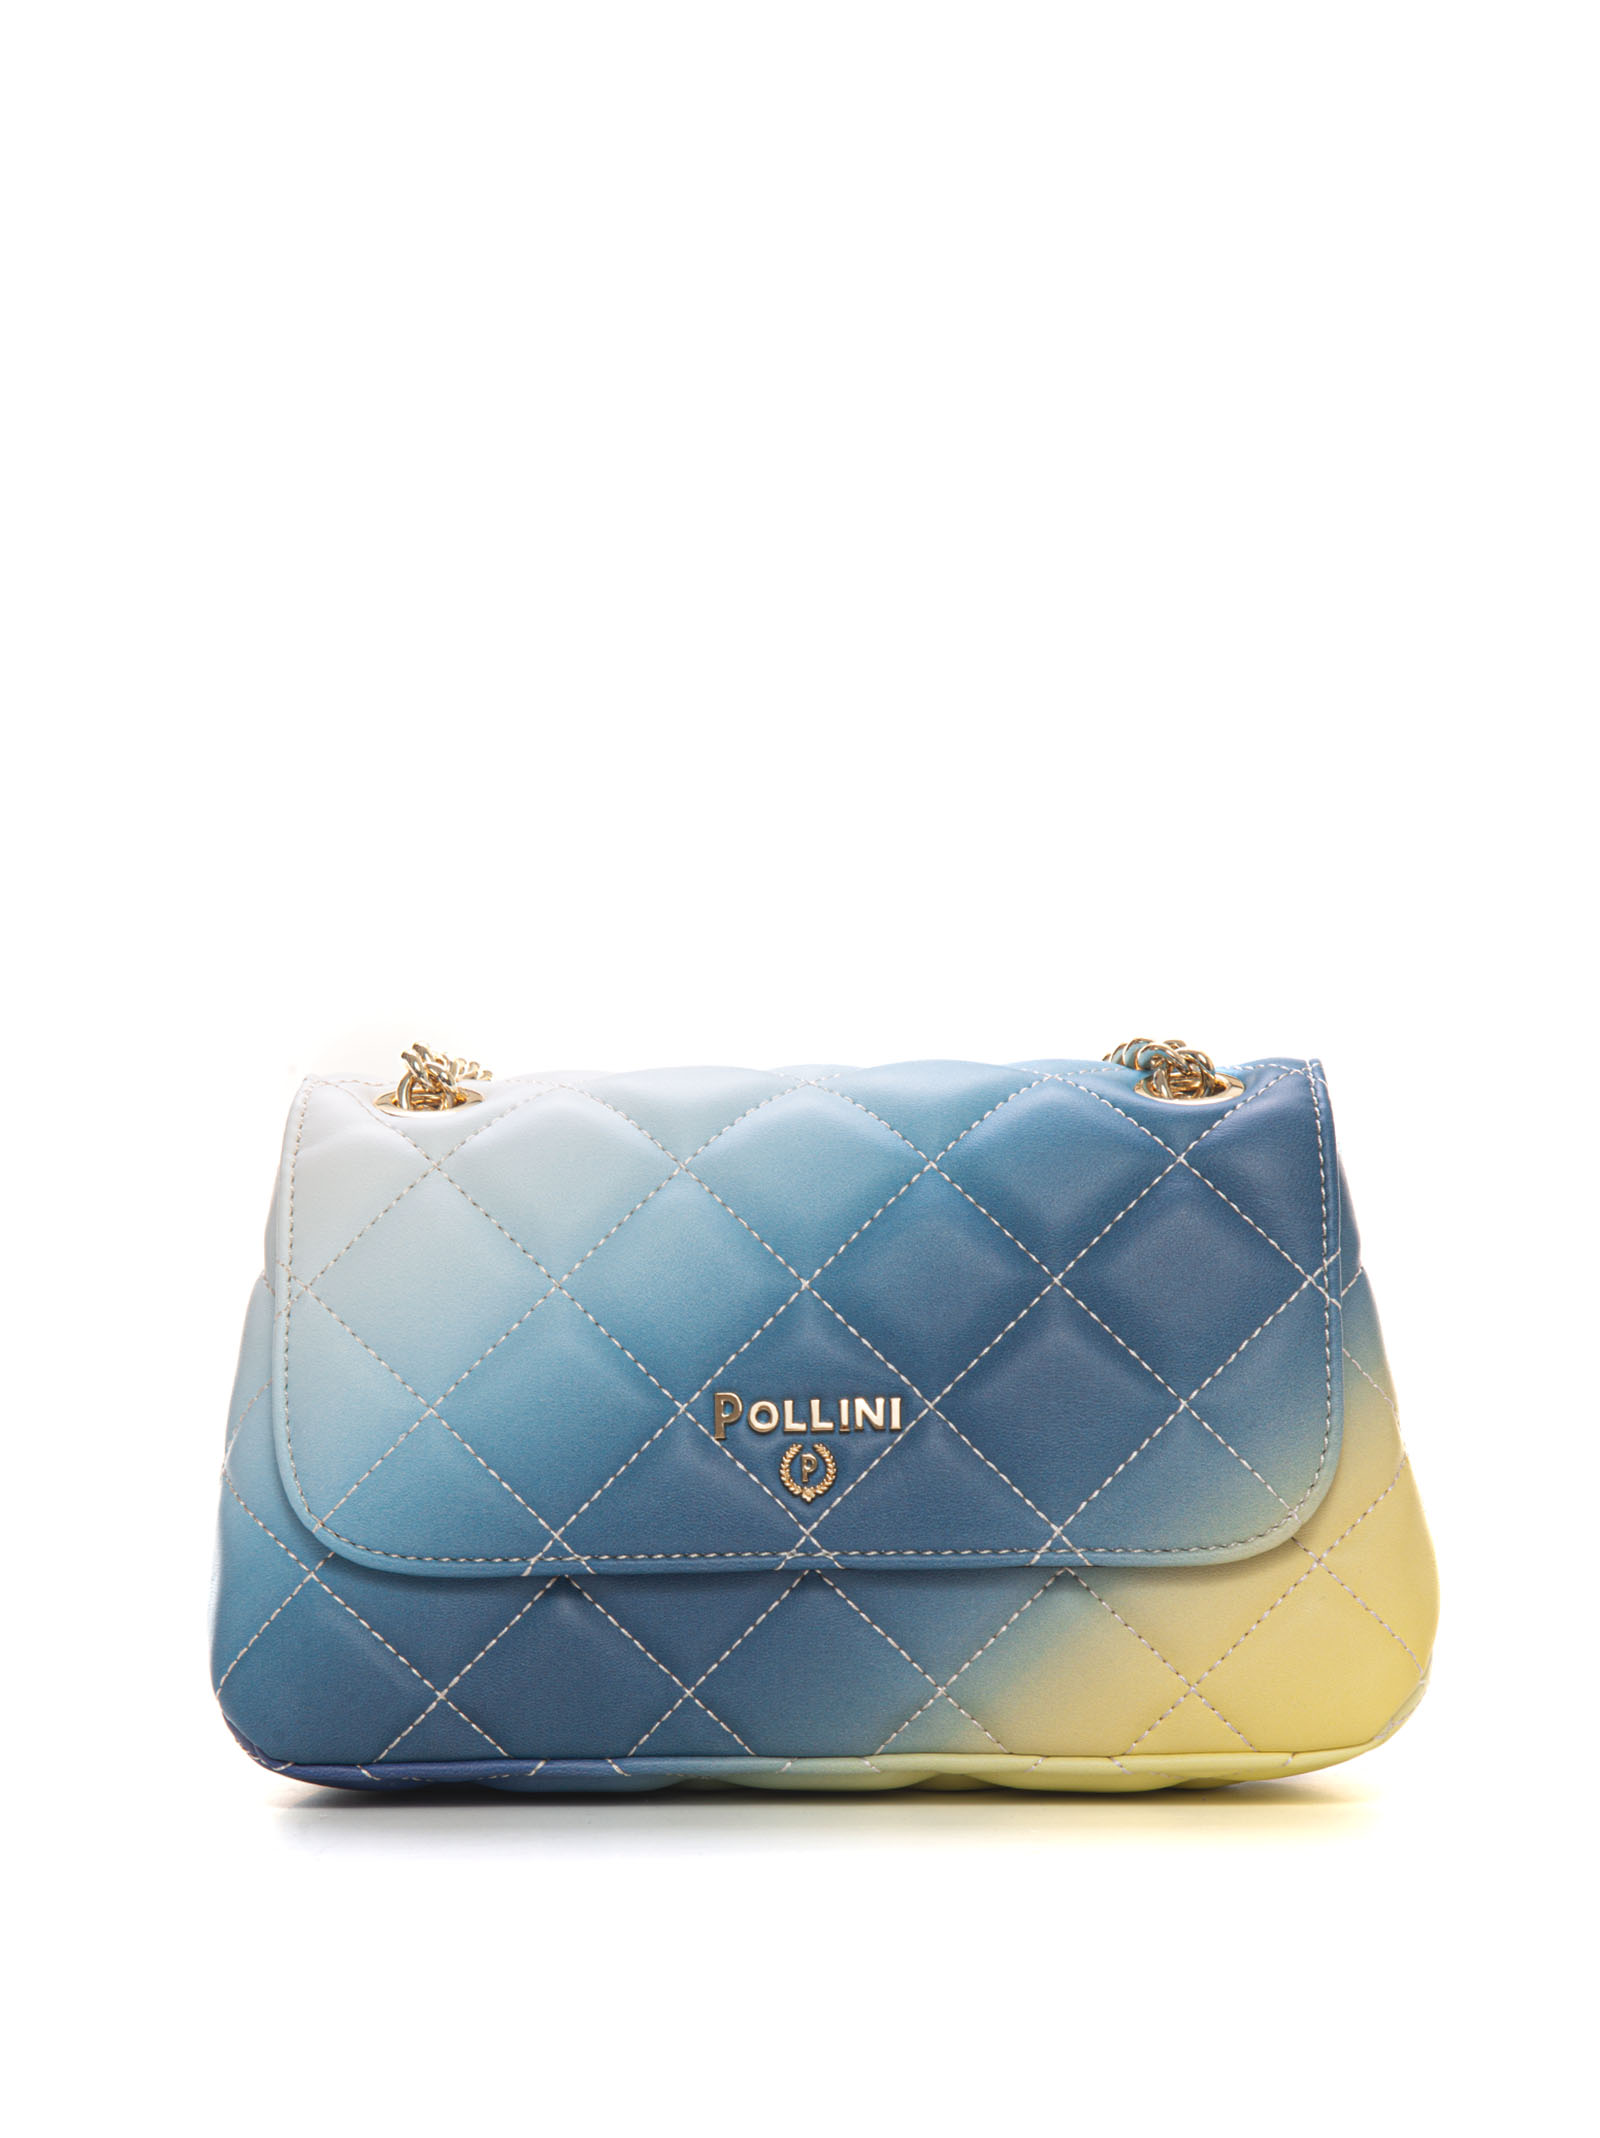 Pollini Piccola Chanel Chanel Style Bag In Azure